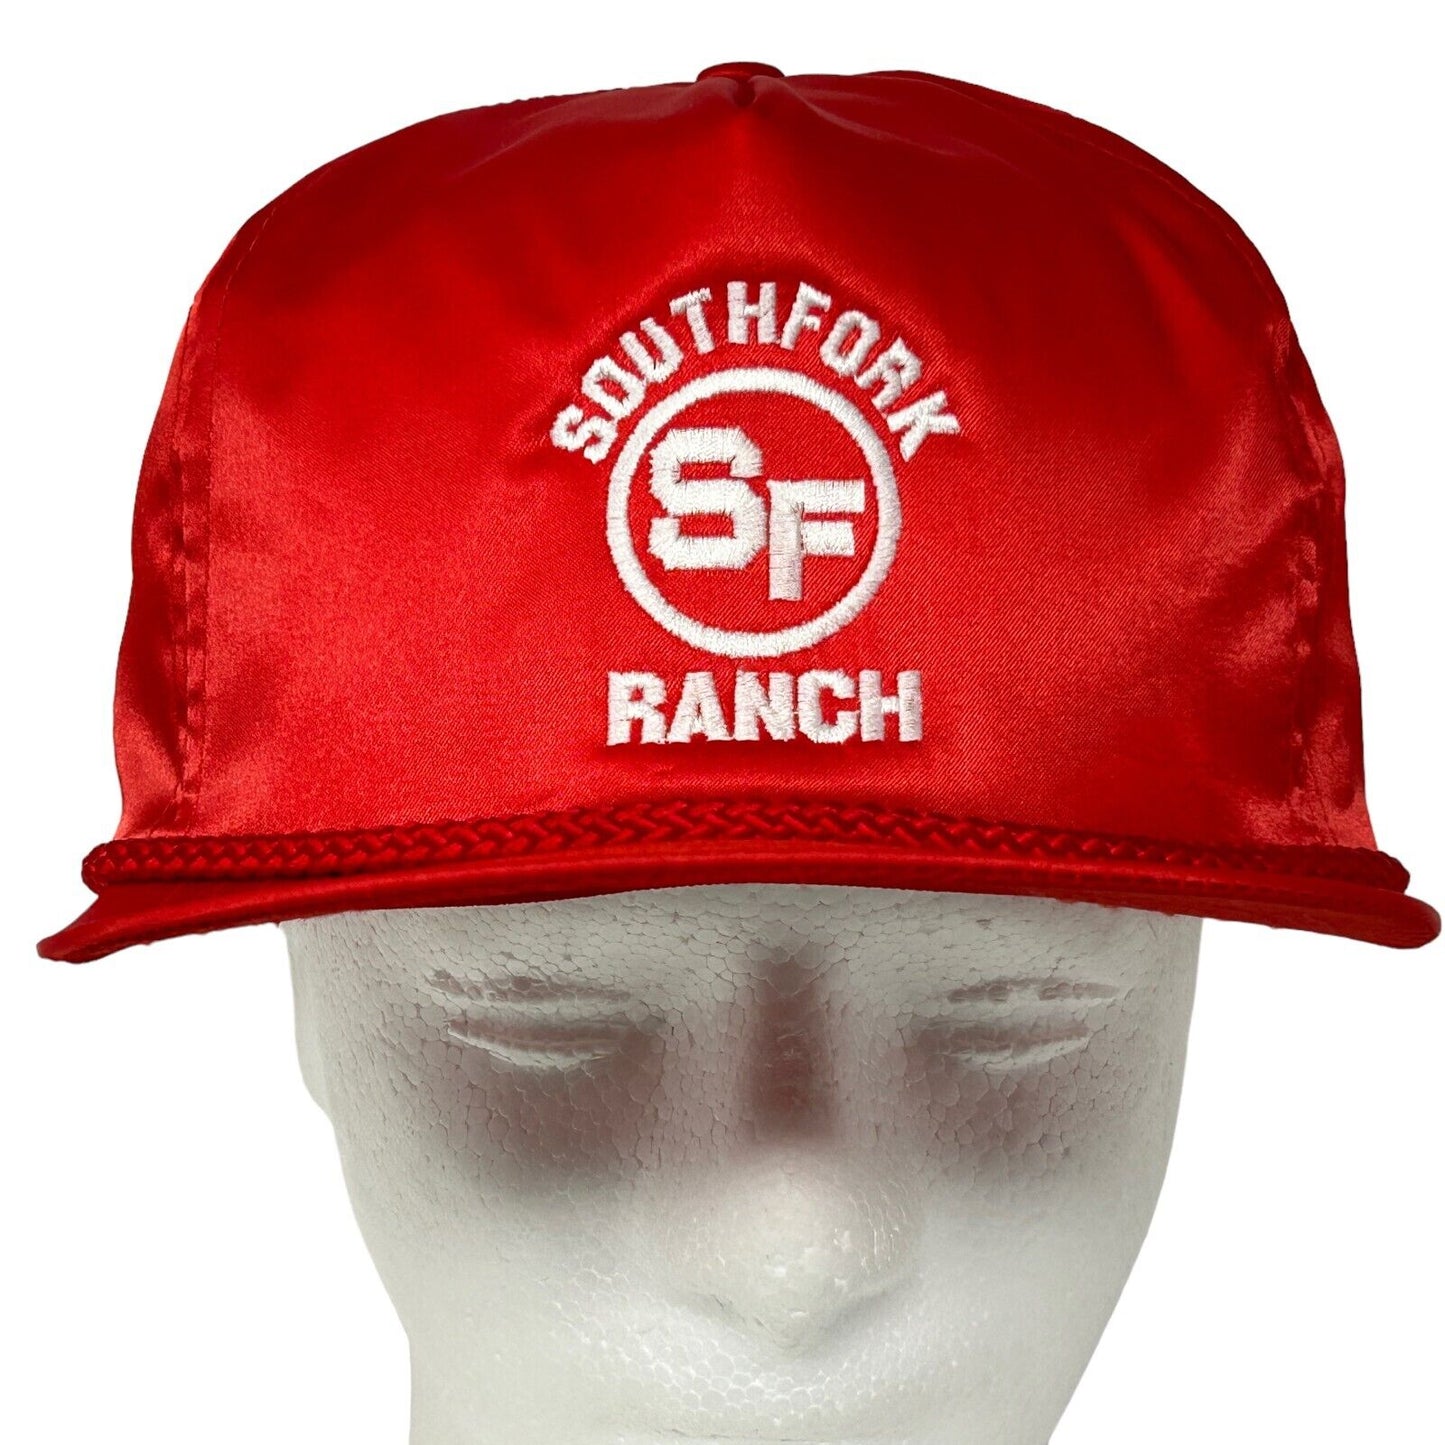 Southfork Ranch Satin Hat Vintage 80s Dallas TV Show Red Strapback Baseball Cap